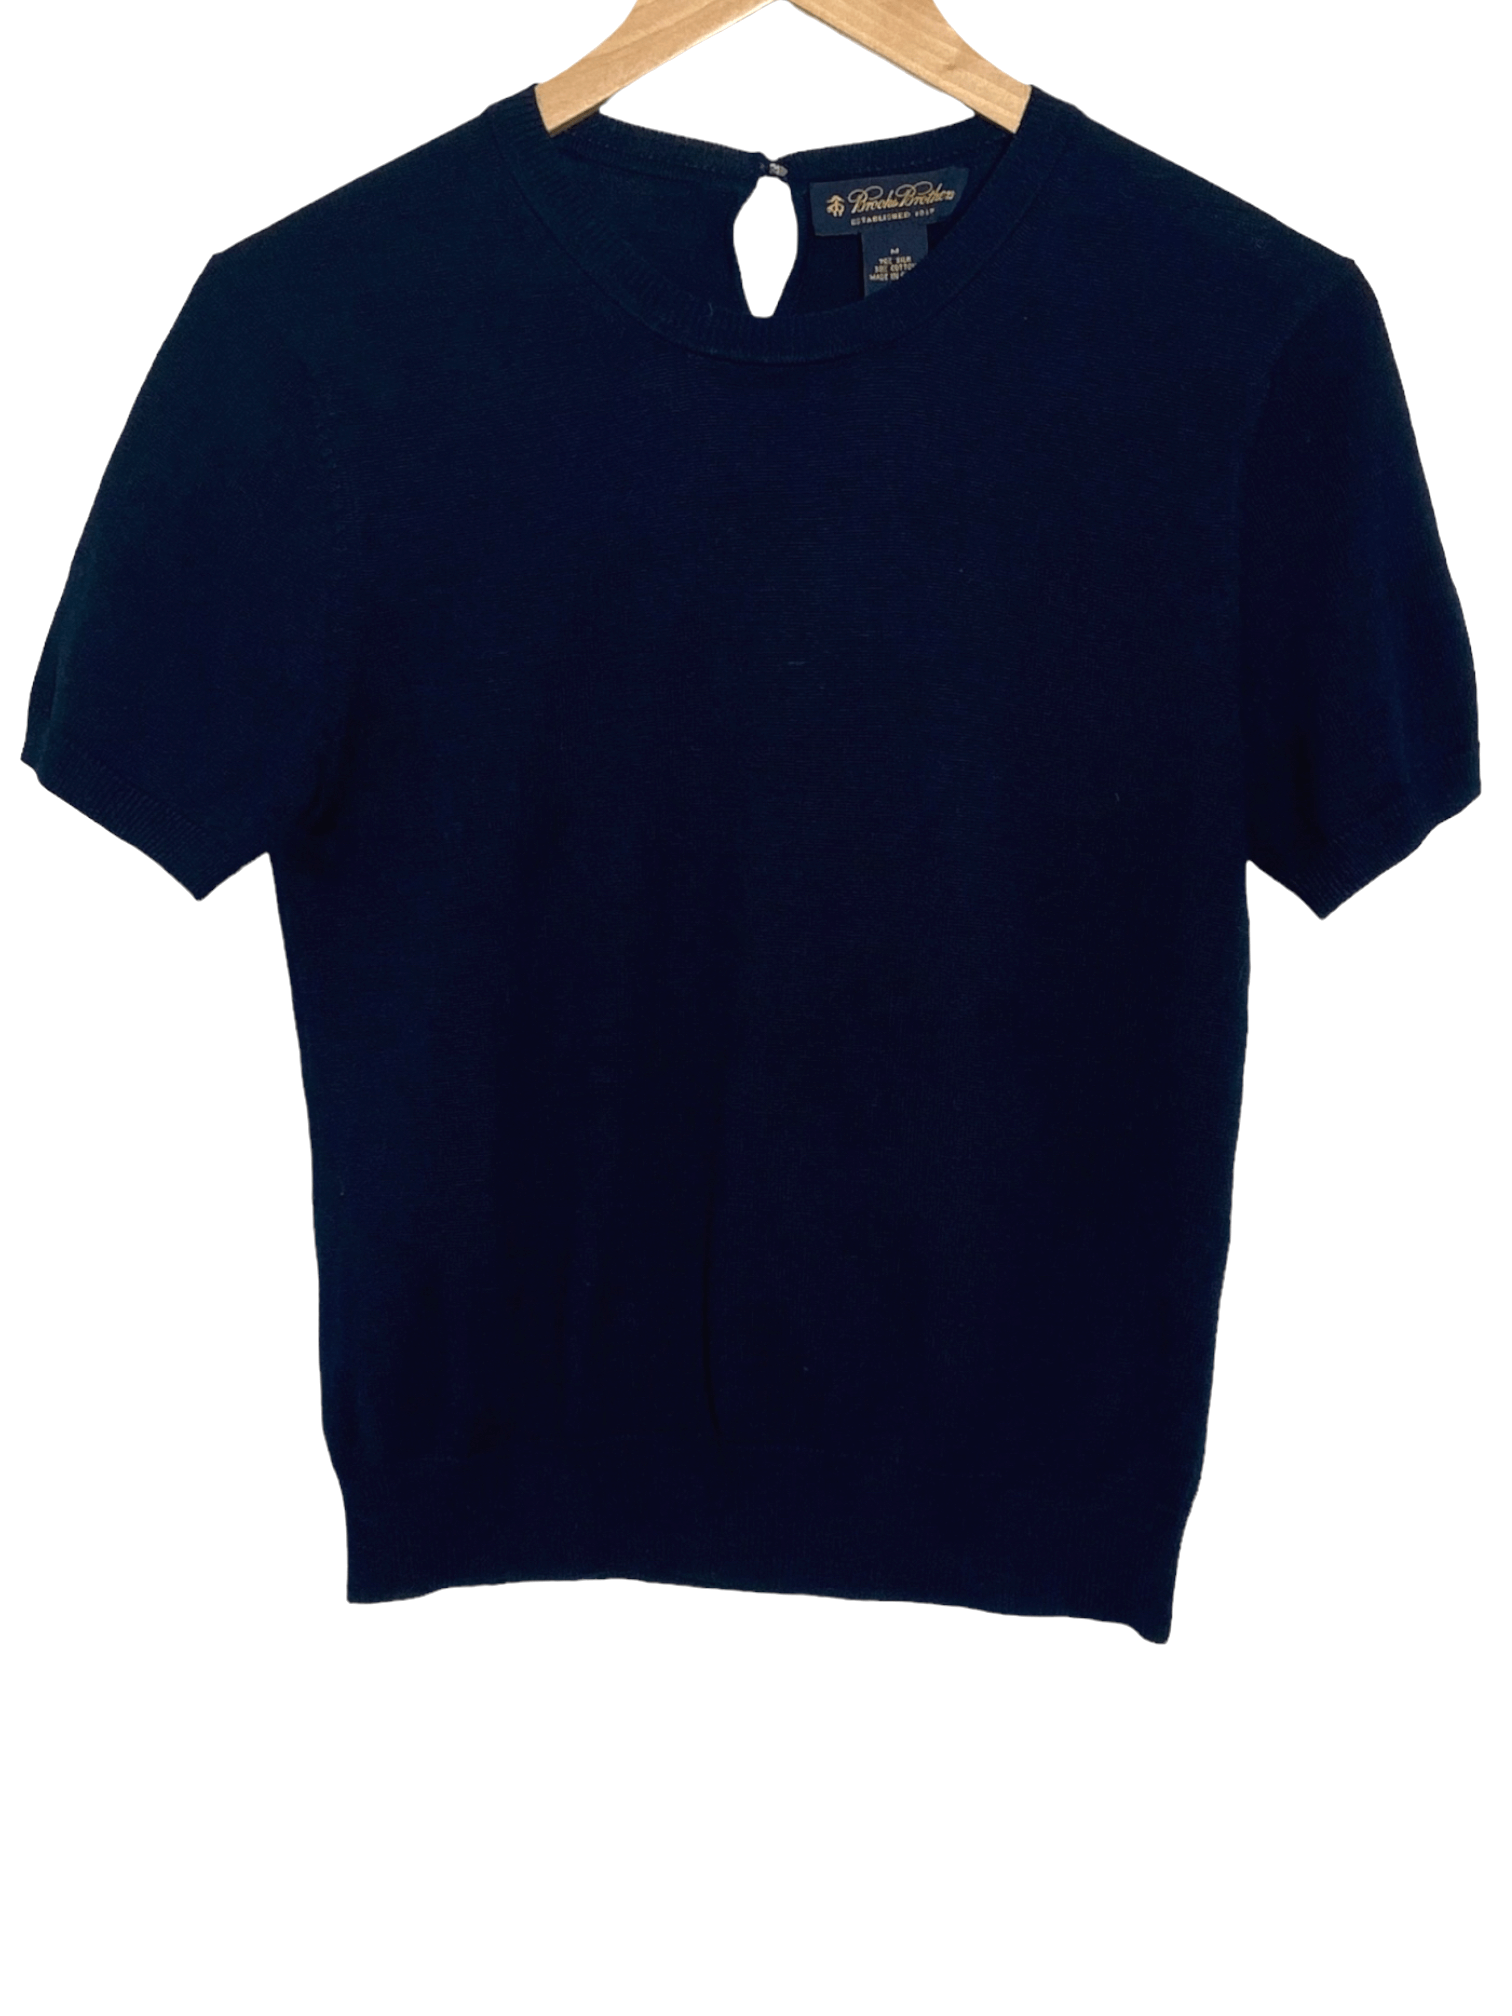 Dark Autumn BROOKS BROTHERS midnight blue short sleeved silk sweater